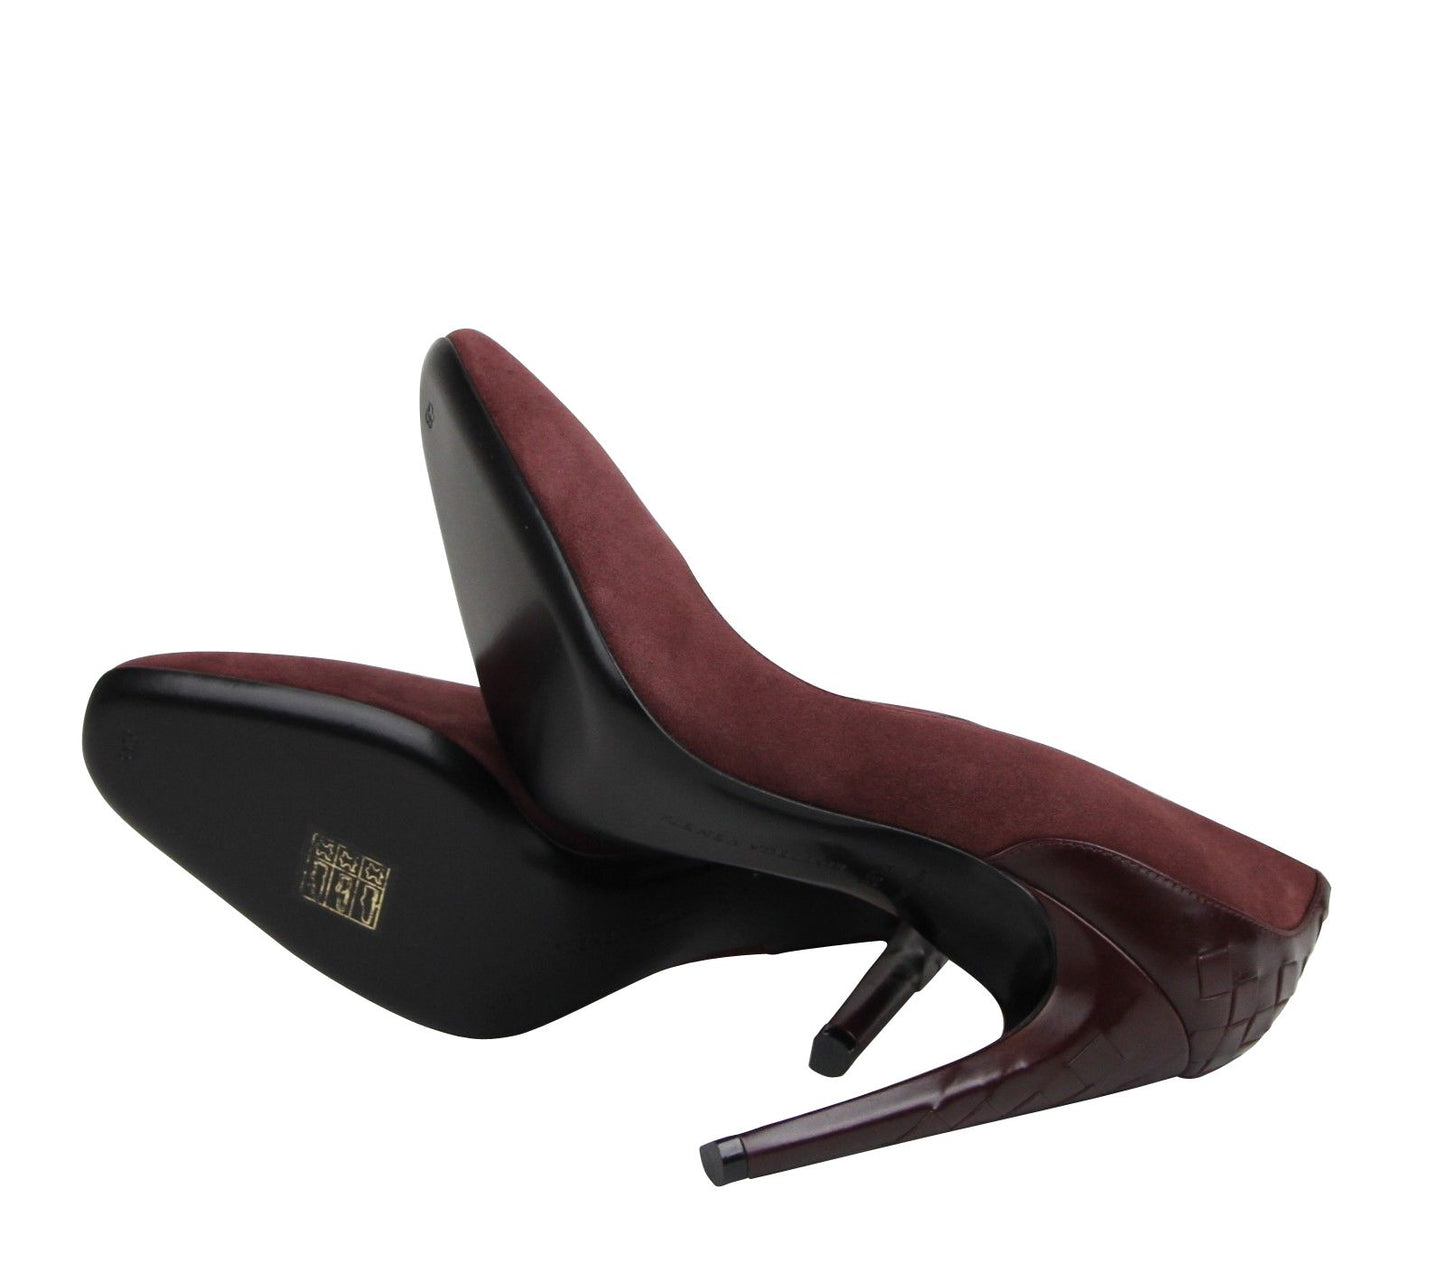 Fashionsarah.com Fashionsarah.com Bottega Veneta Women's Dark Rose Suede Leather Luxe Heels